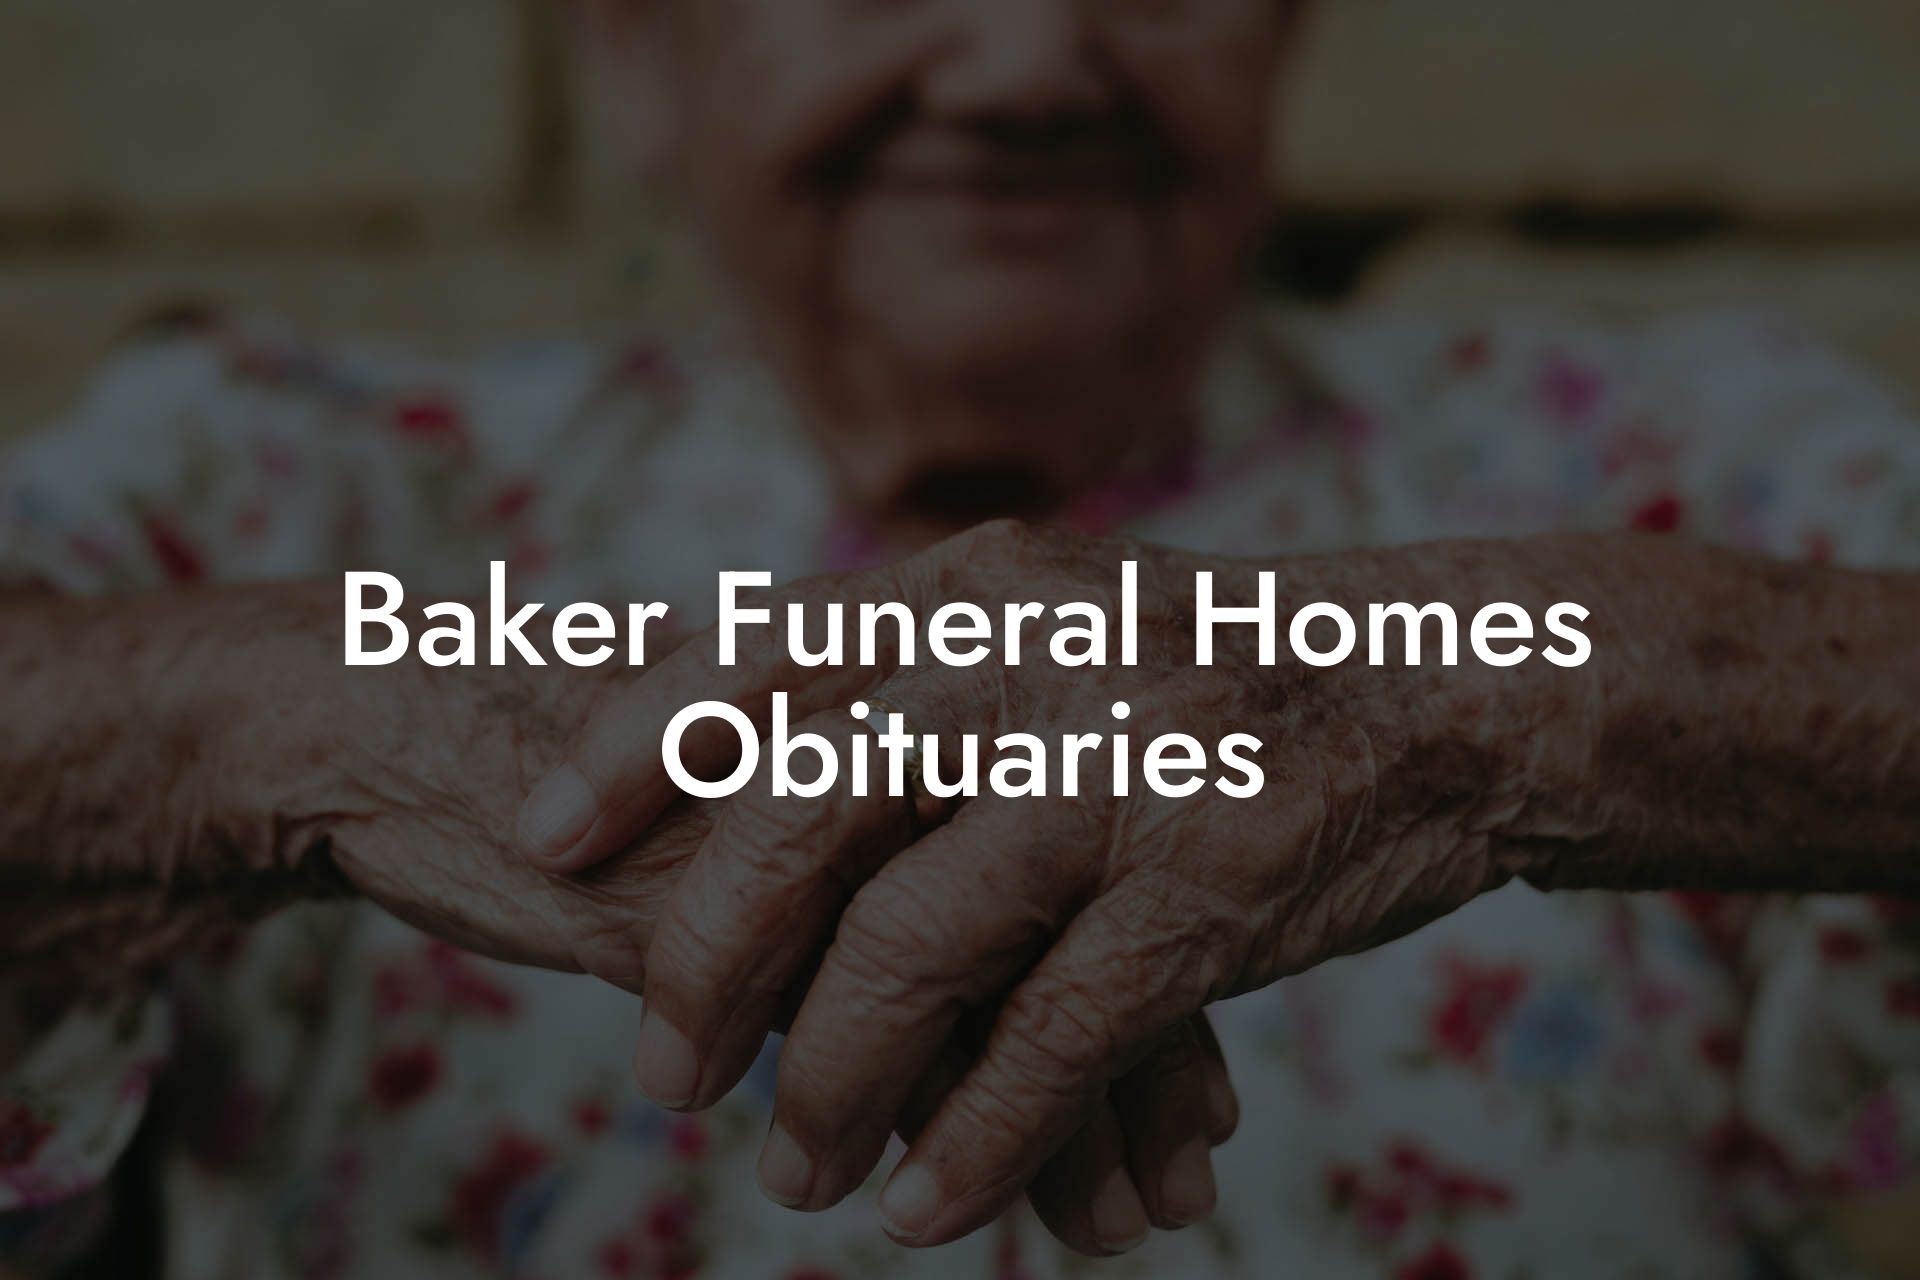 Baker Funeral Homes Obituaries